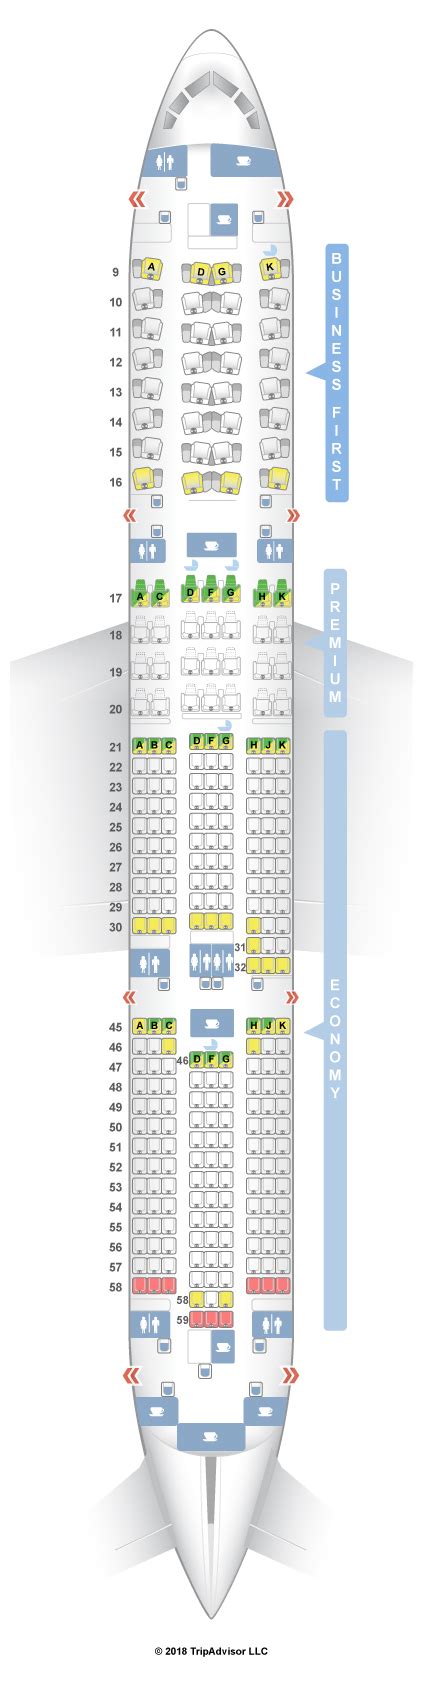 boeing 787 9 789 seat map